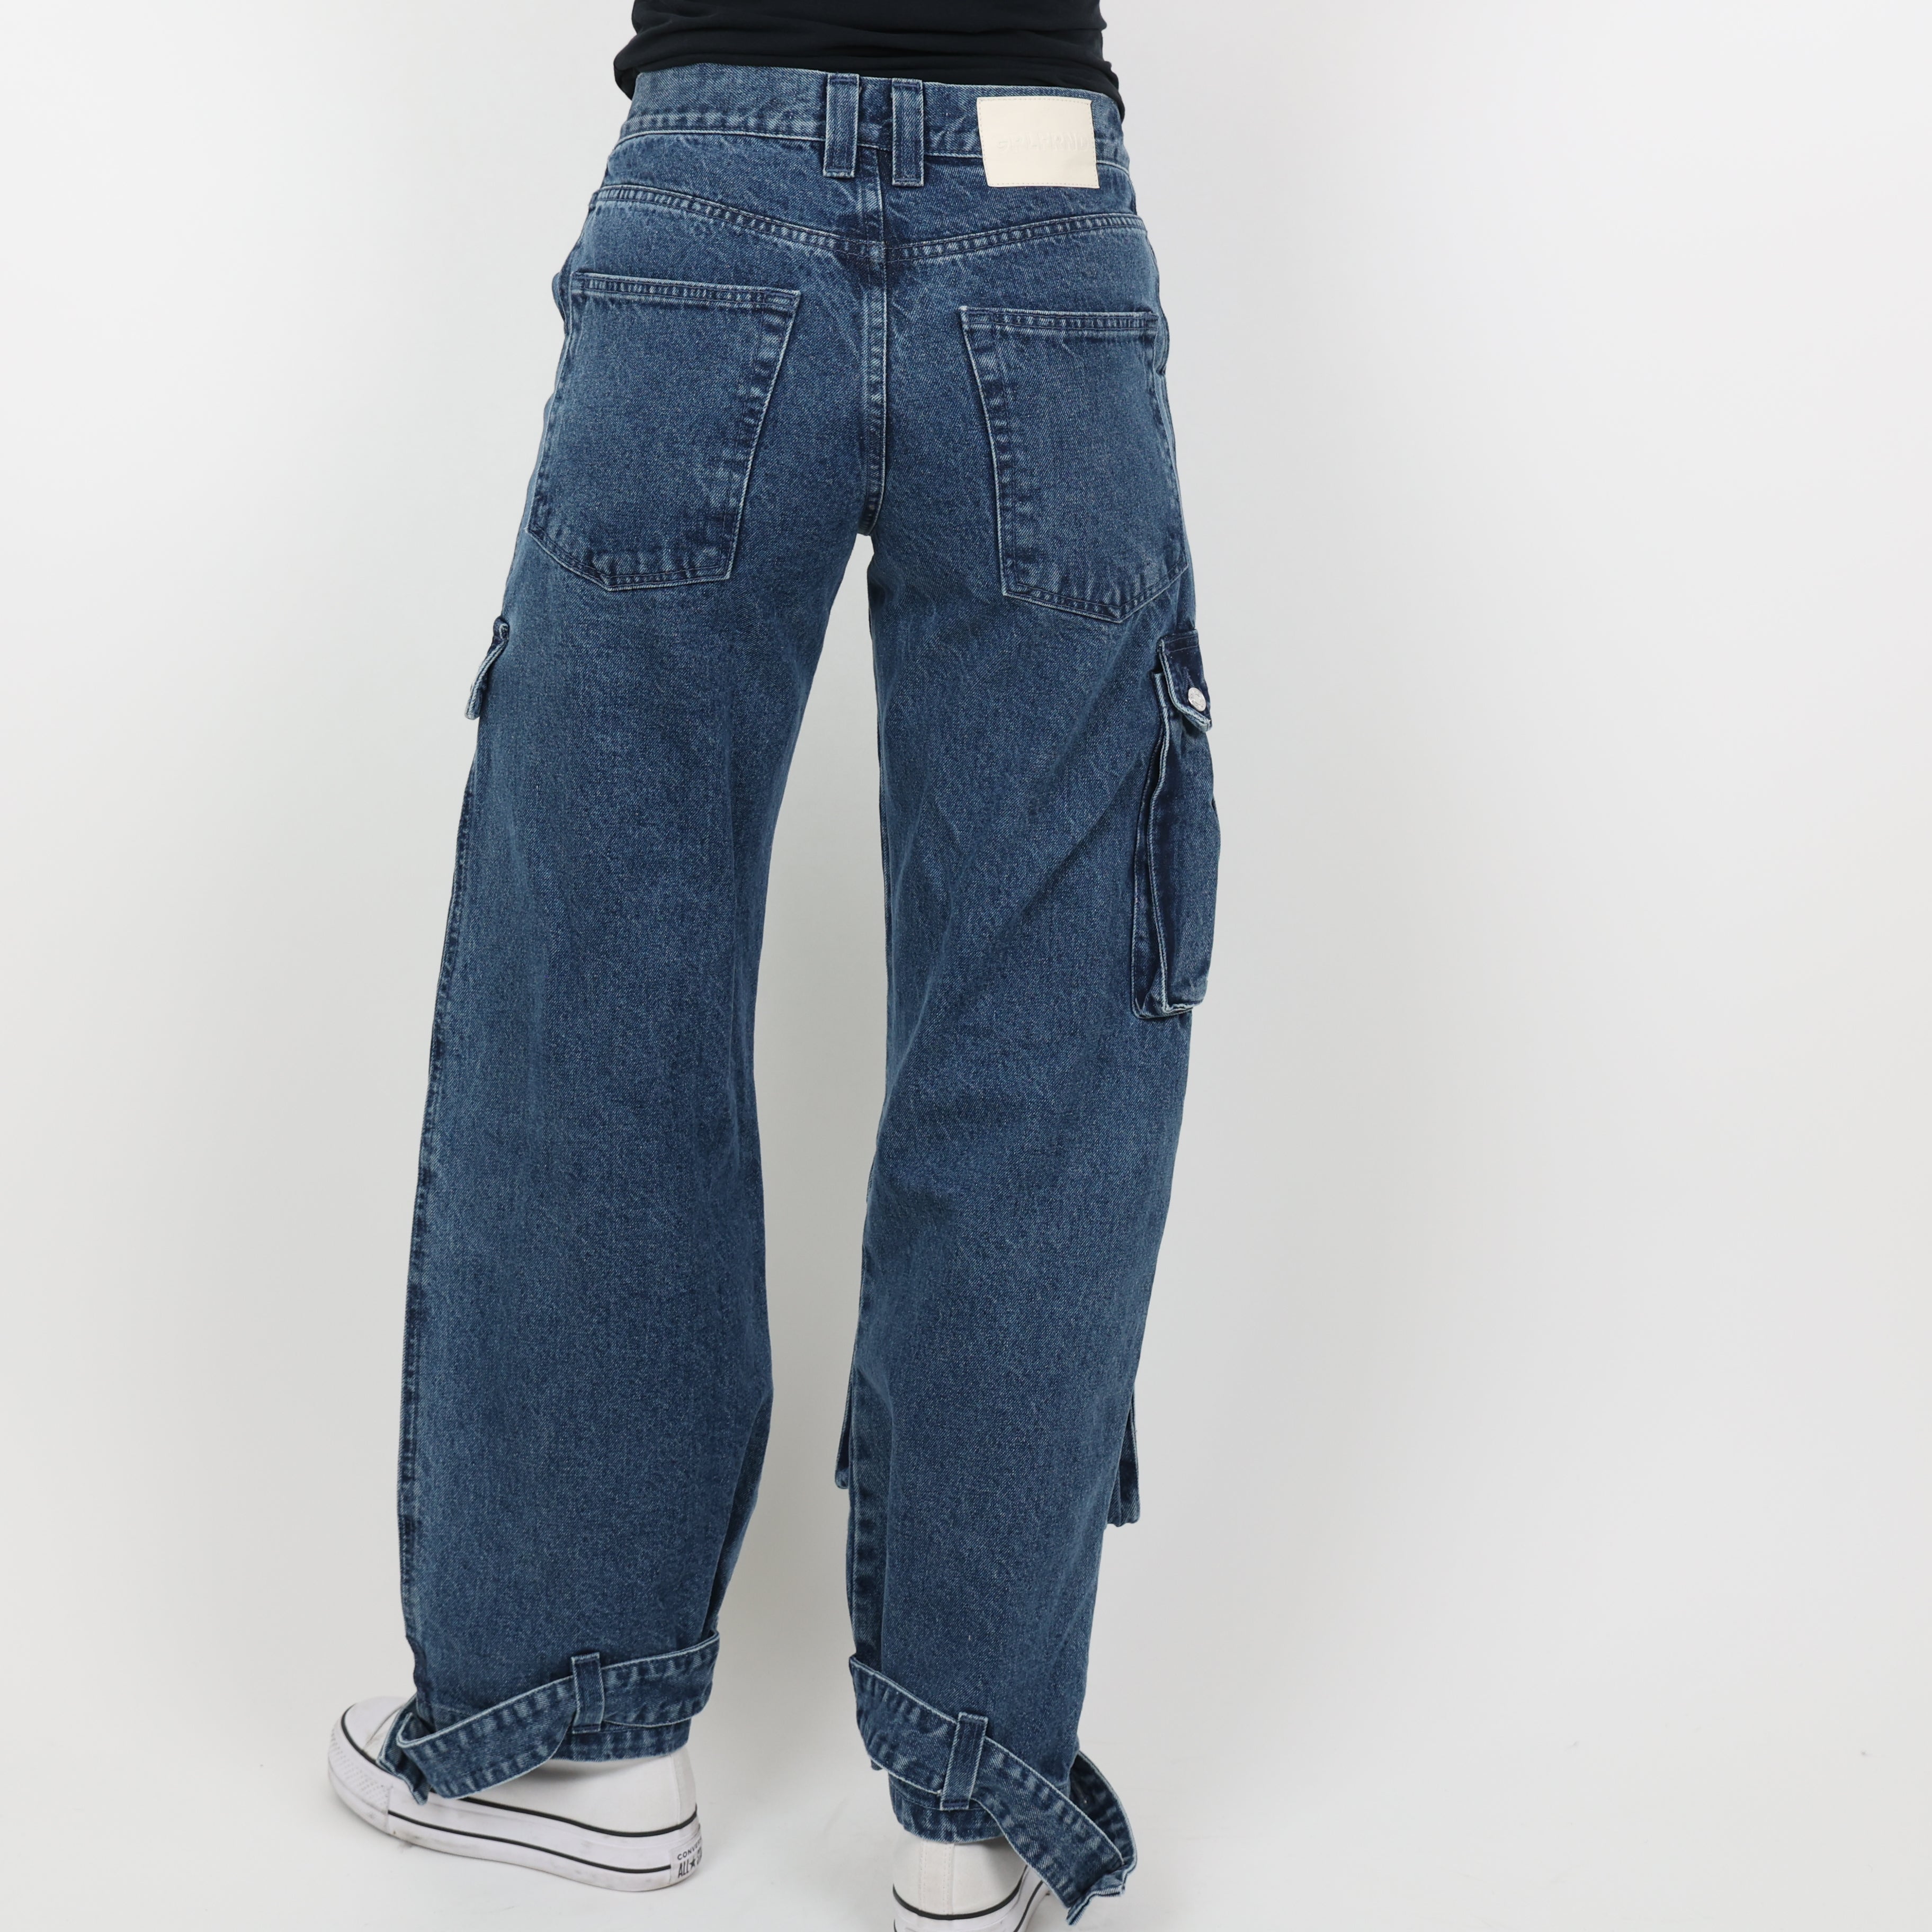 Jeans, Waist 24